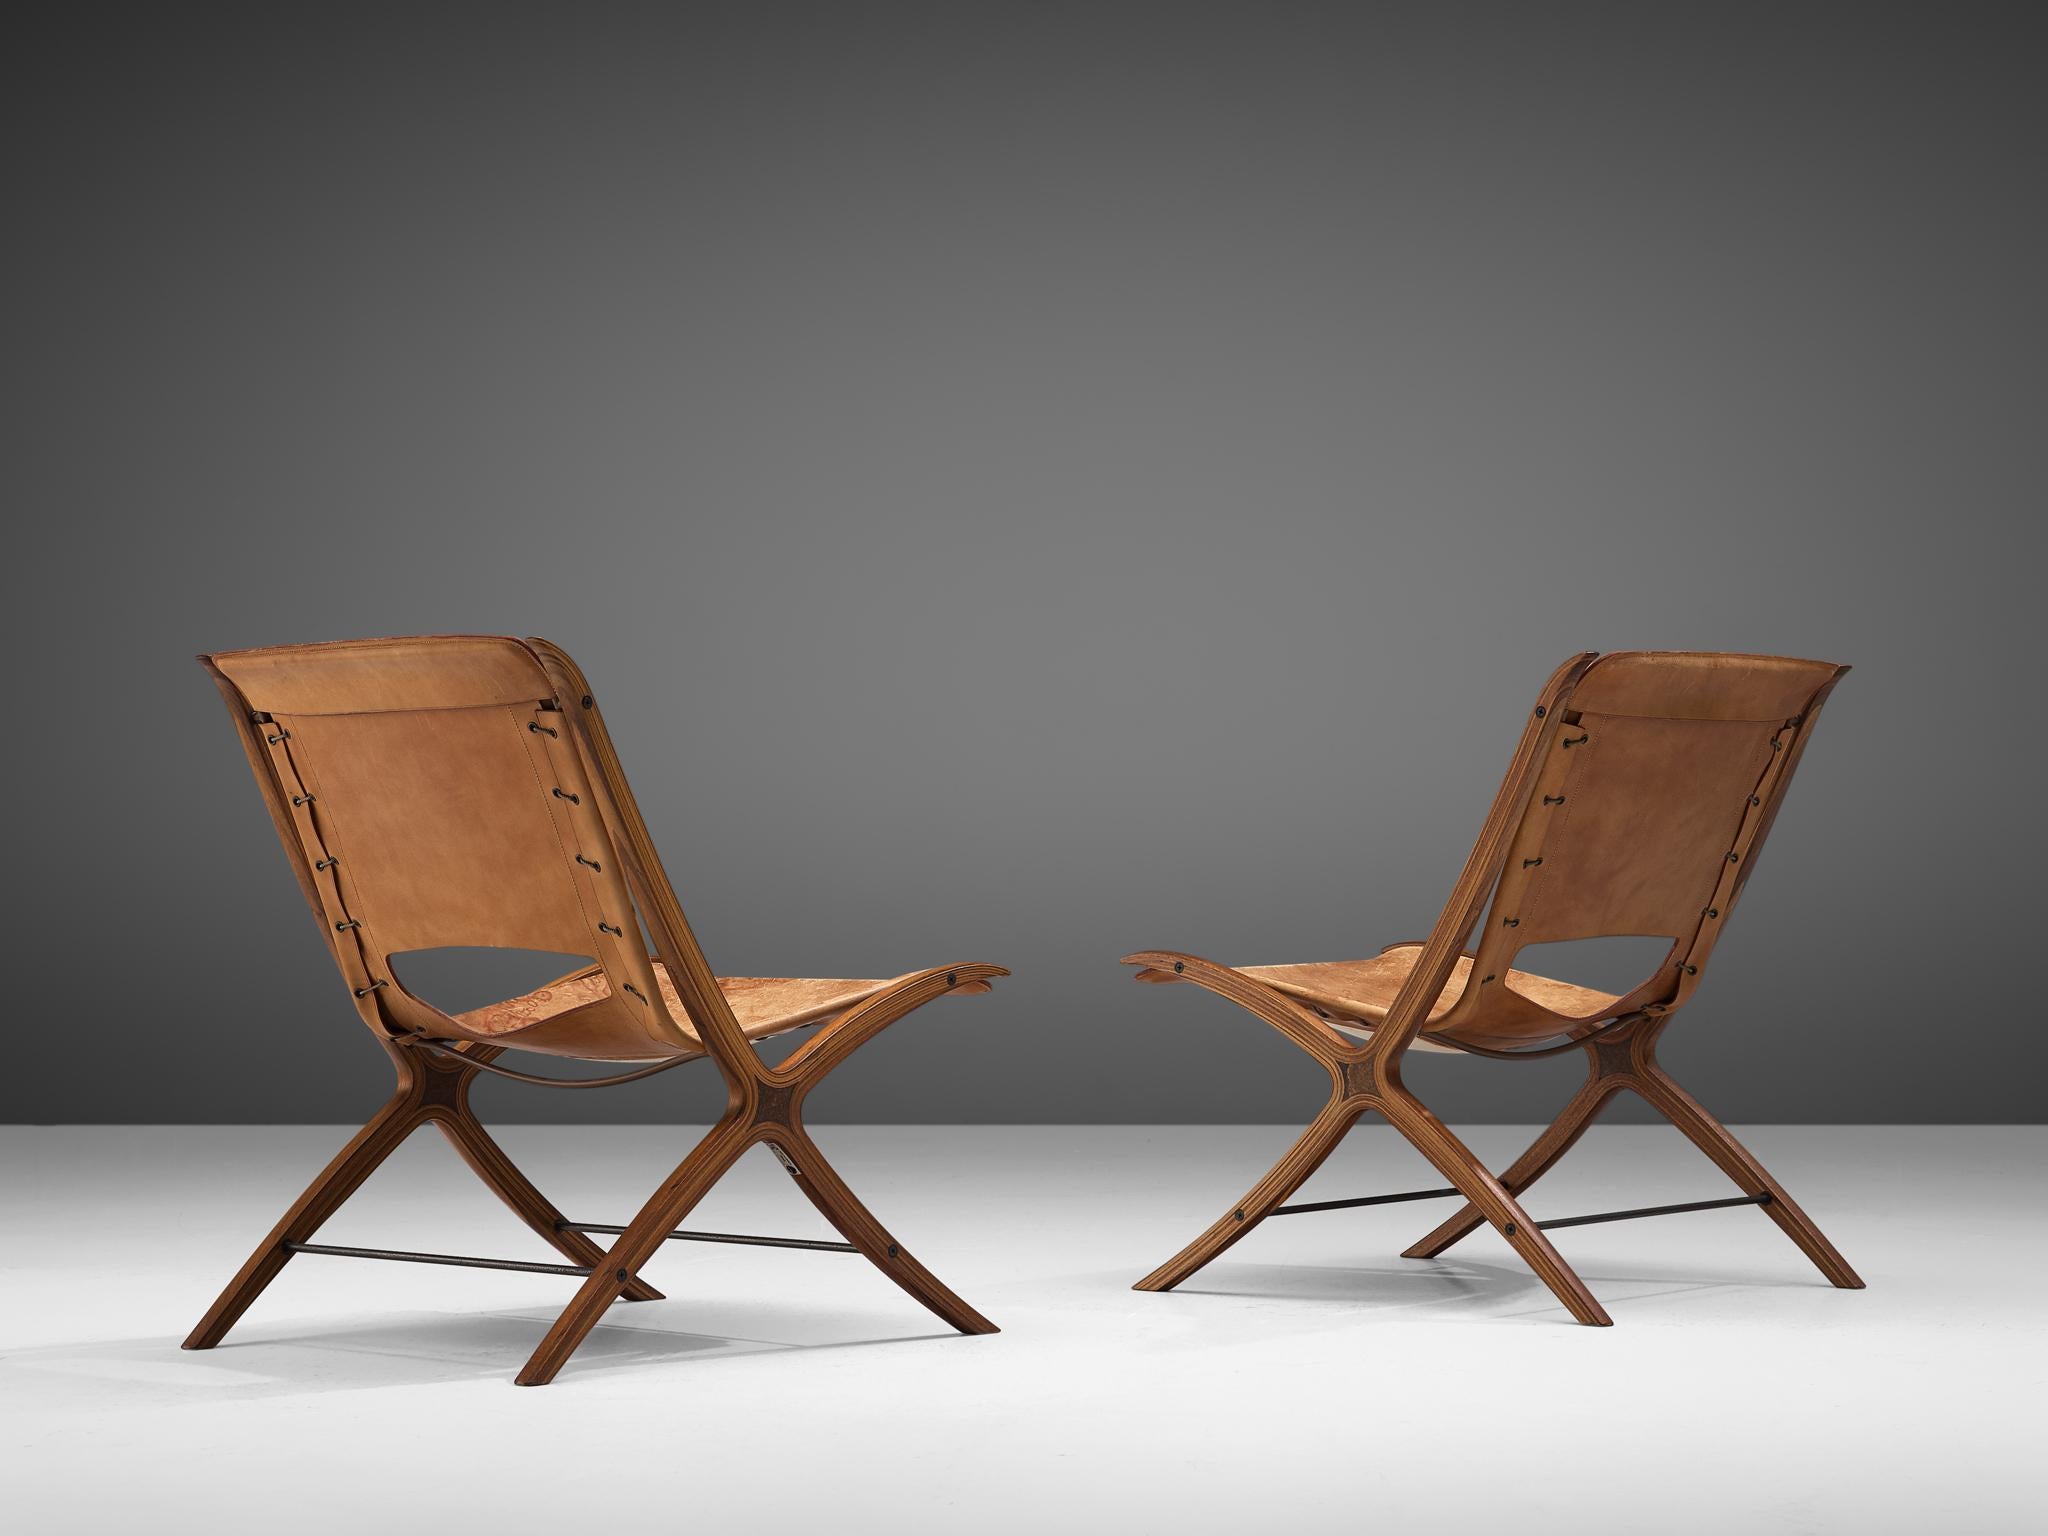 Peter Hvidt & Orla Mølgaard Nielsen for Fritz Hansen, pair of X-chairs 'model 6103', original cognac leather upholstery, mahogany and burl wood, Denmark, 1958.

This pair of chairs designed by Peter Hvidt and Orla Mølgaard Nielsen is for obvious